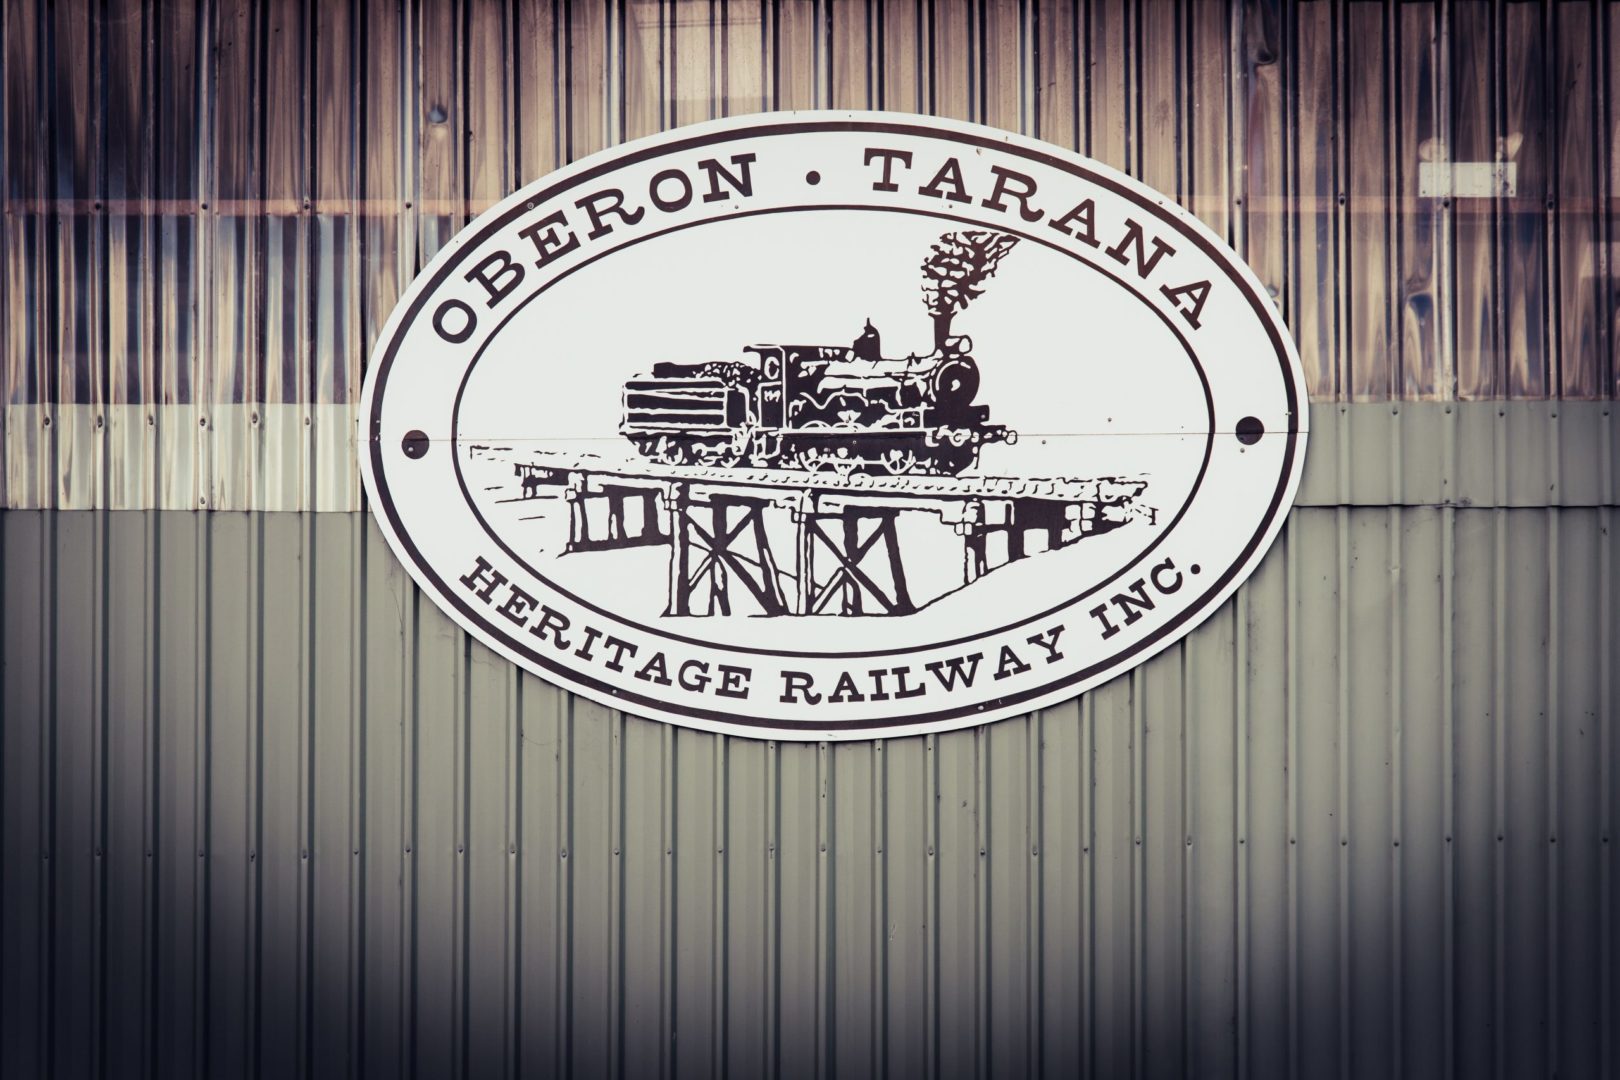 Oberon Tarana Heritage Railway